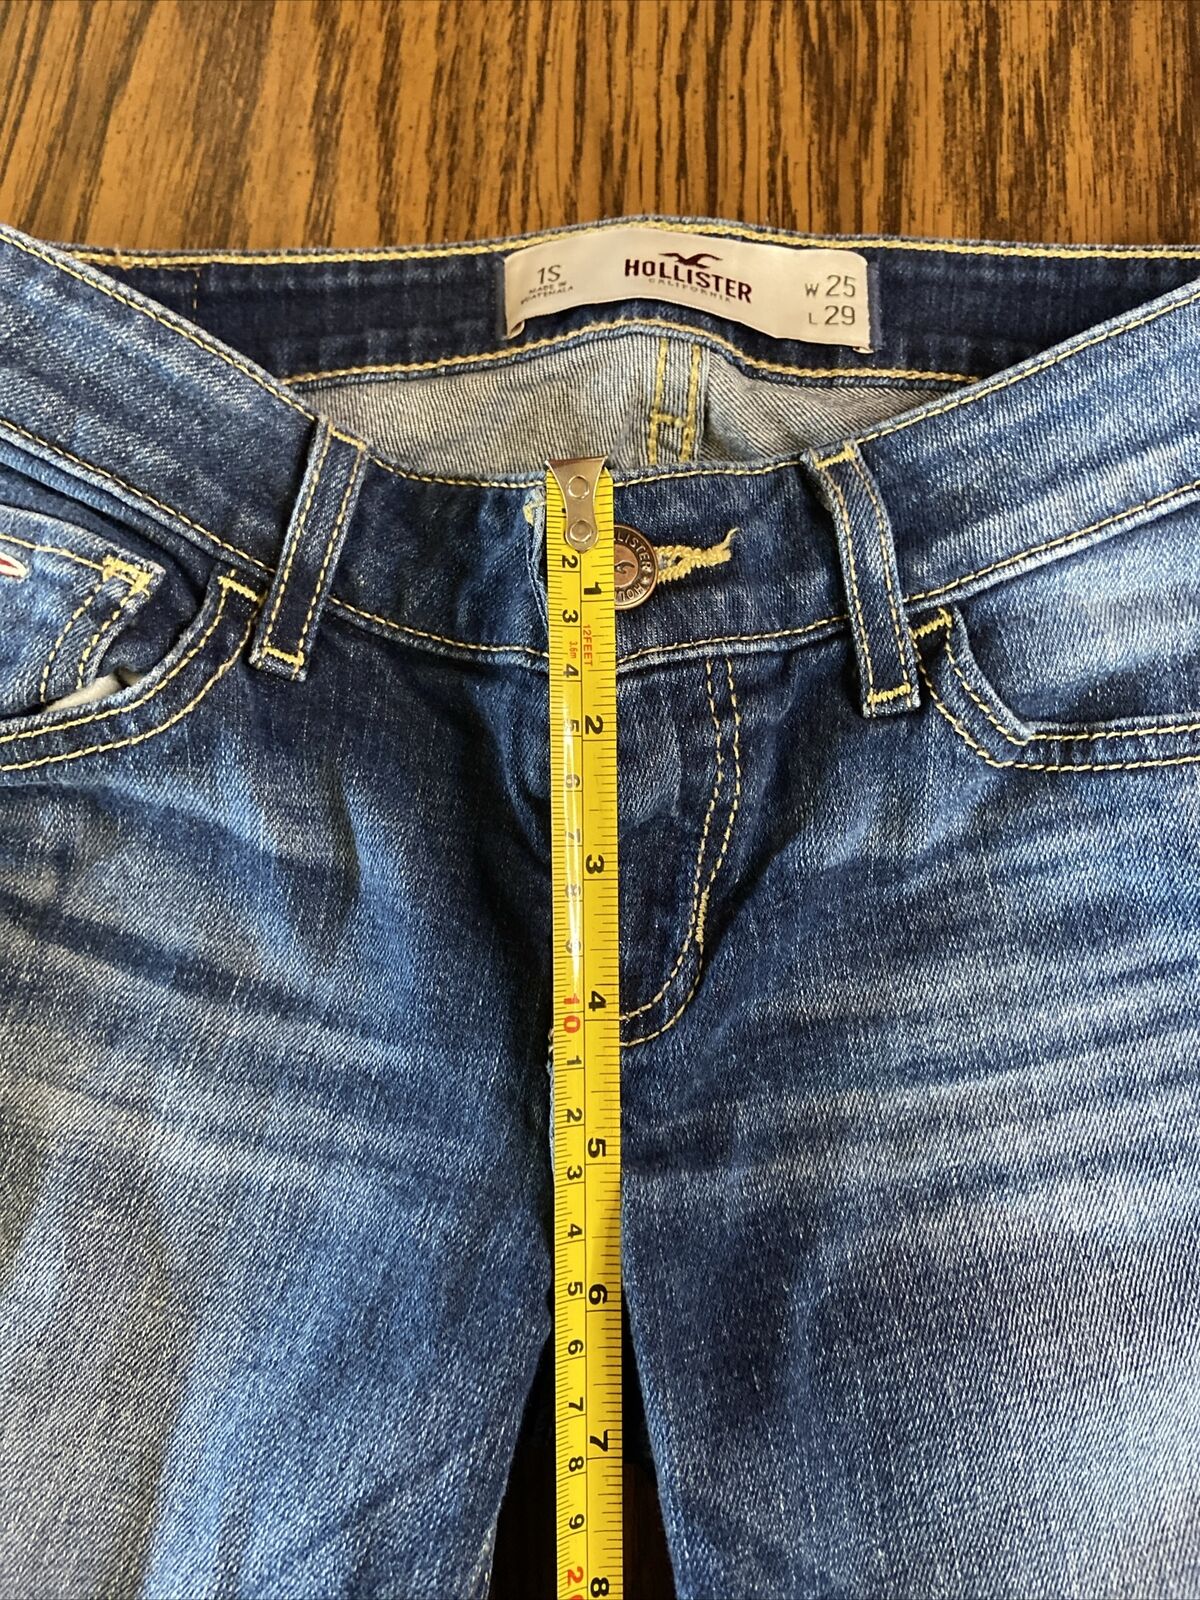 Hollister women's jeans  Size 1S W 25 / L 29 - image 6